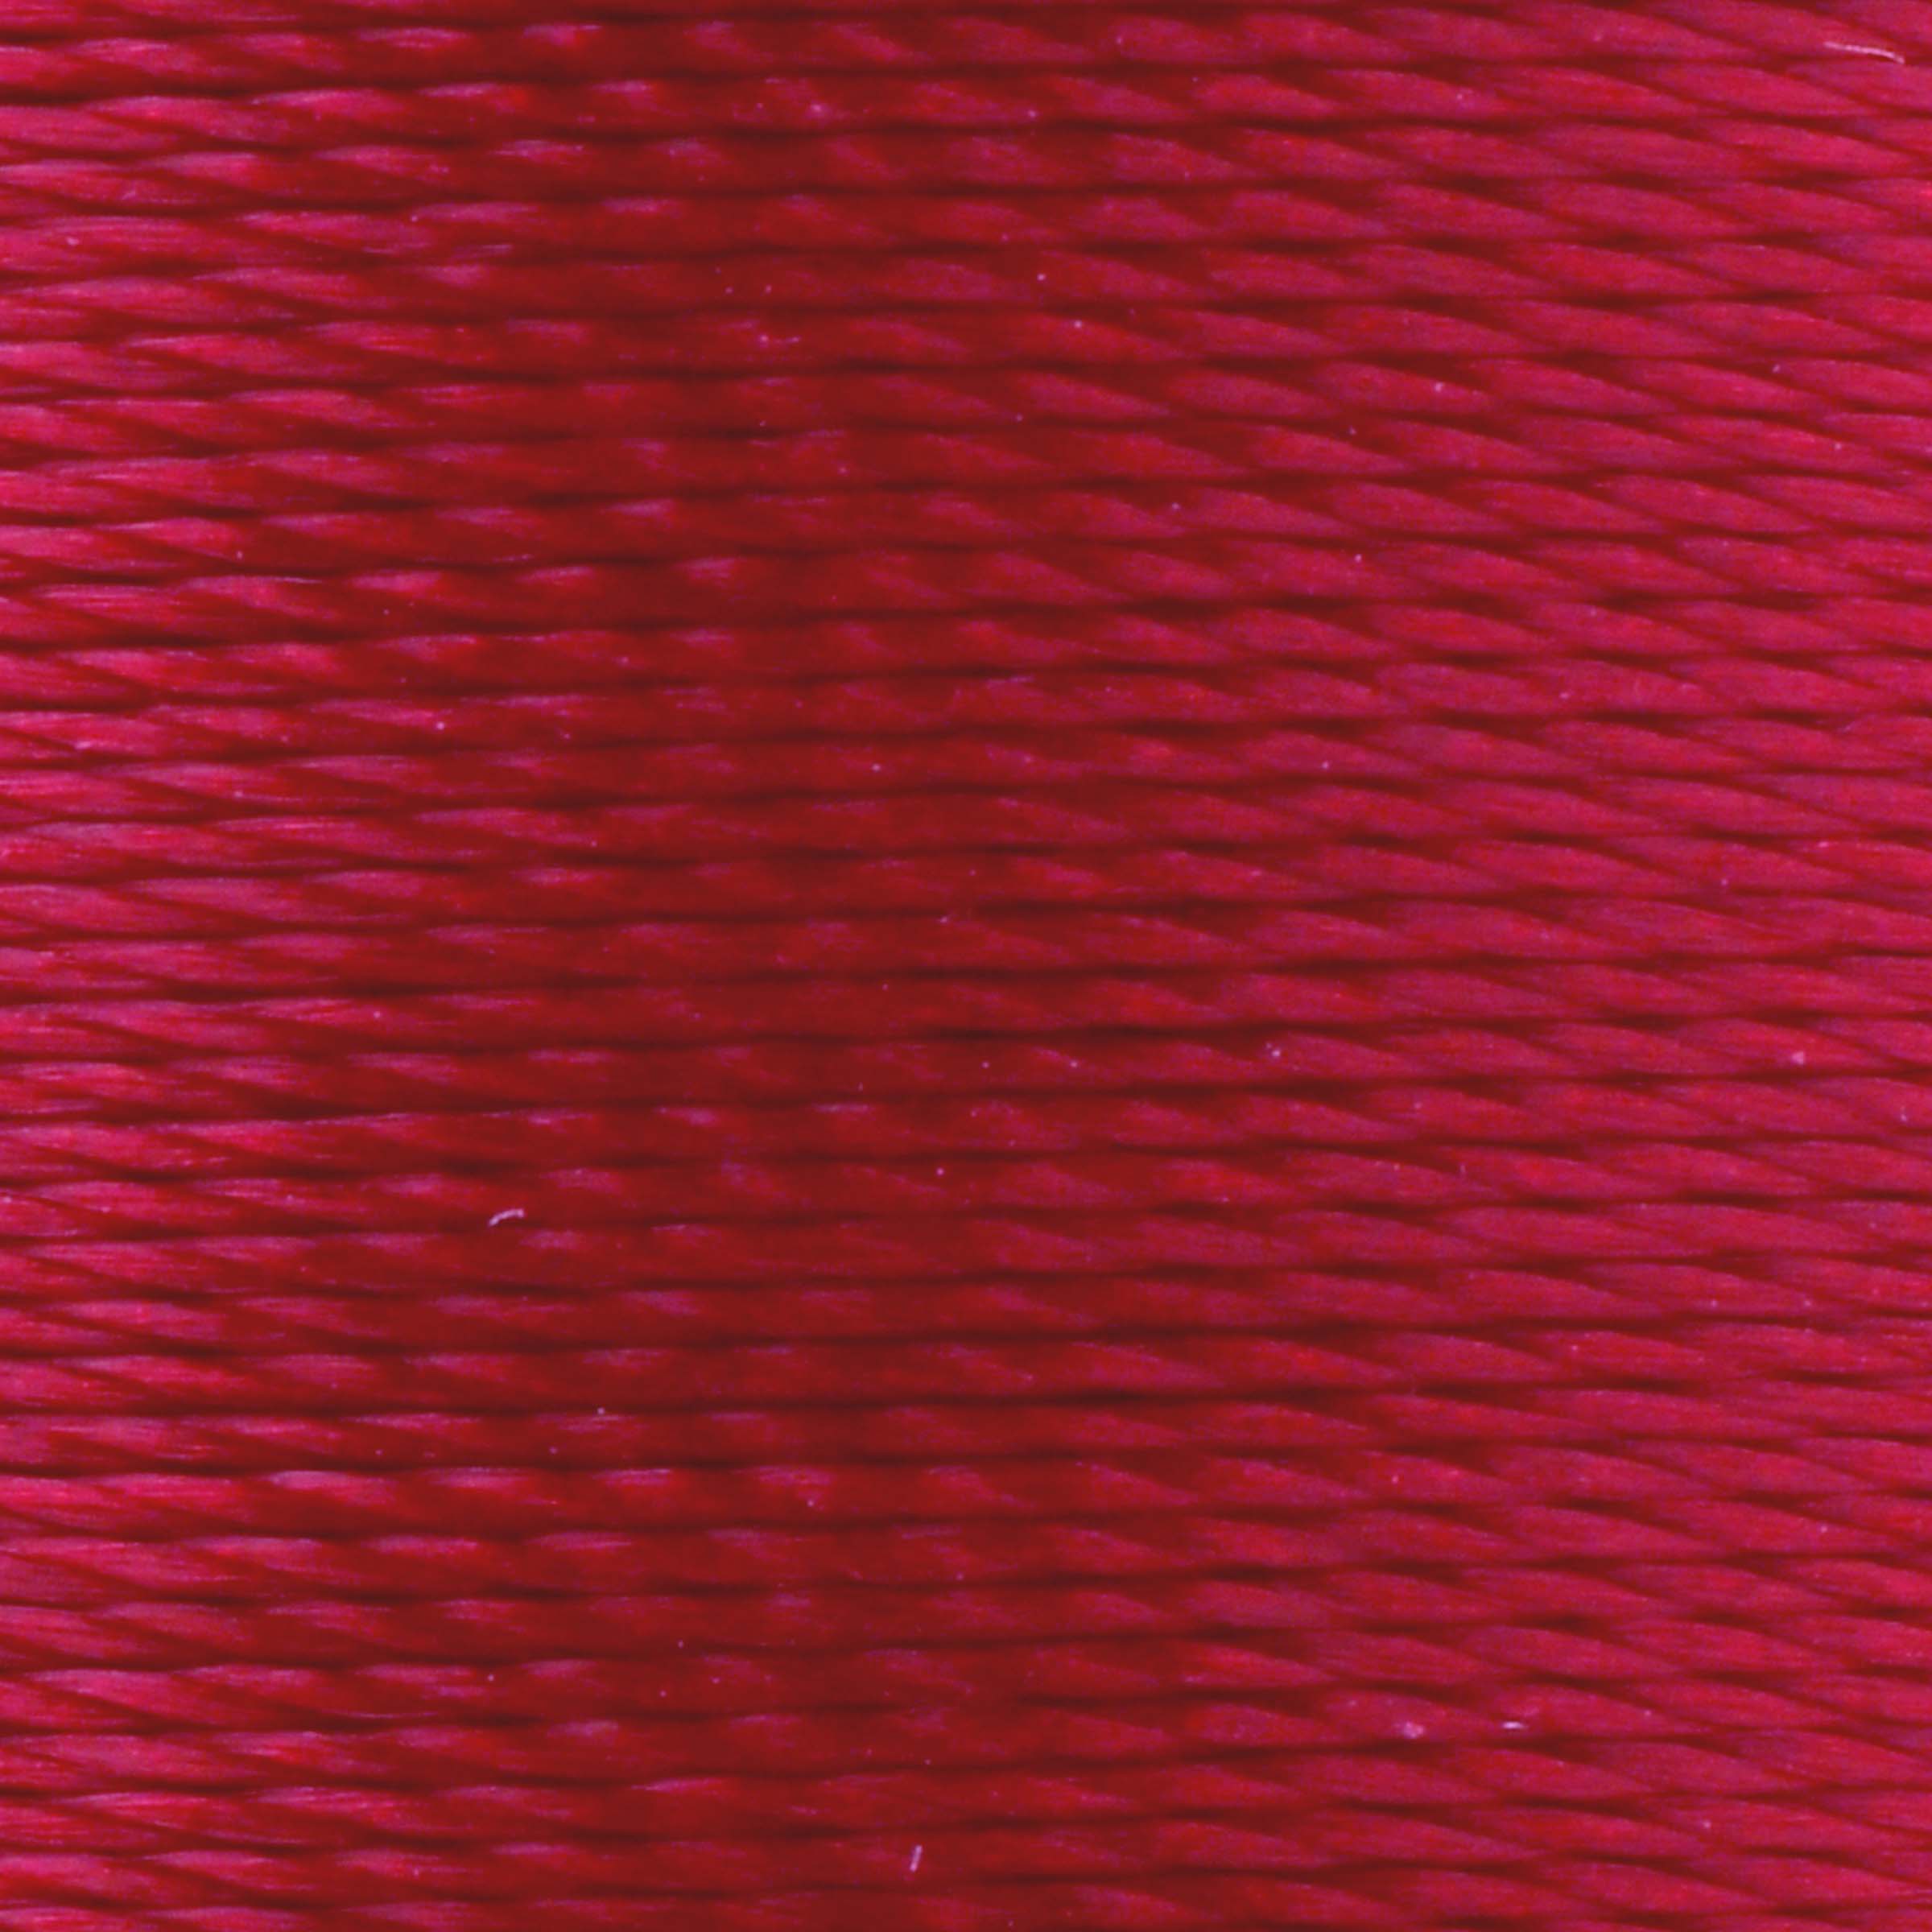 ProWrap Nylon Rod Winding Thread - Size D (4 oz)